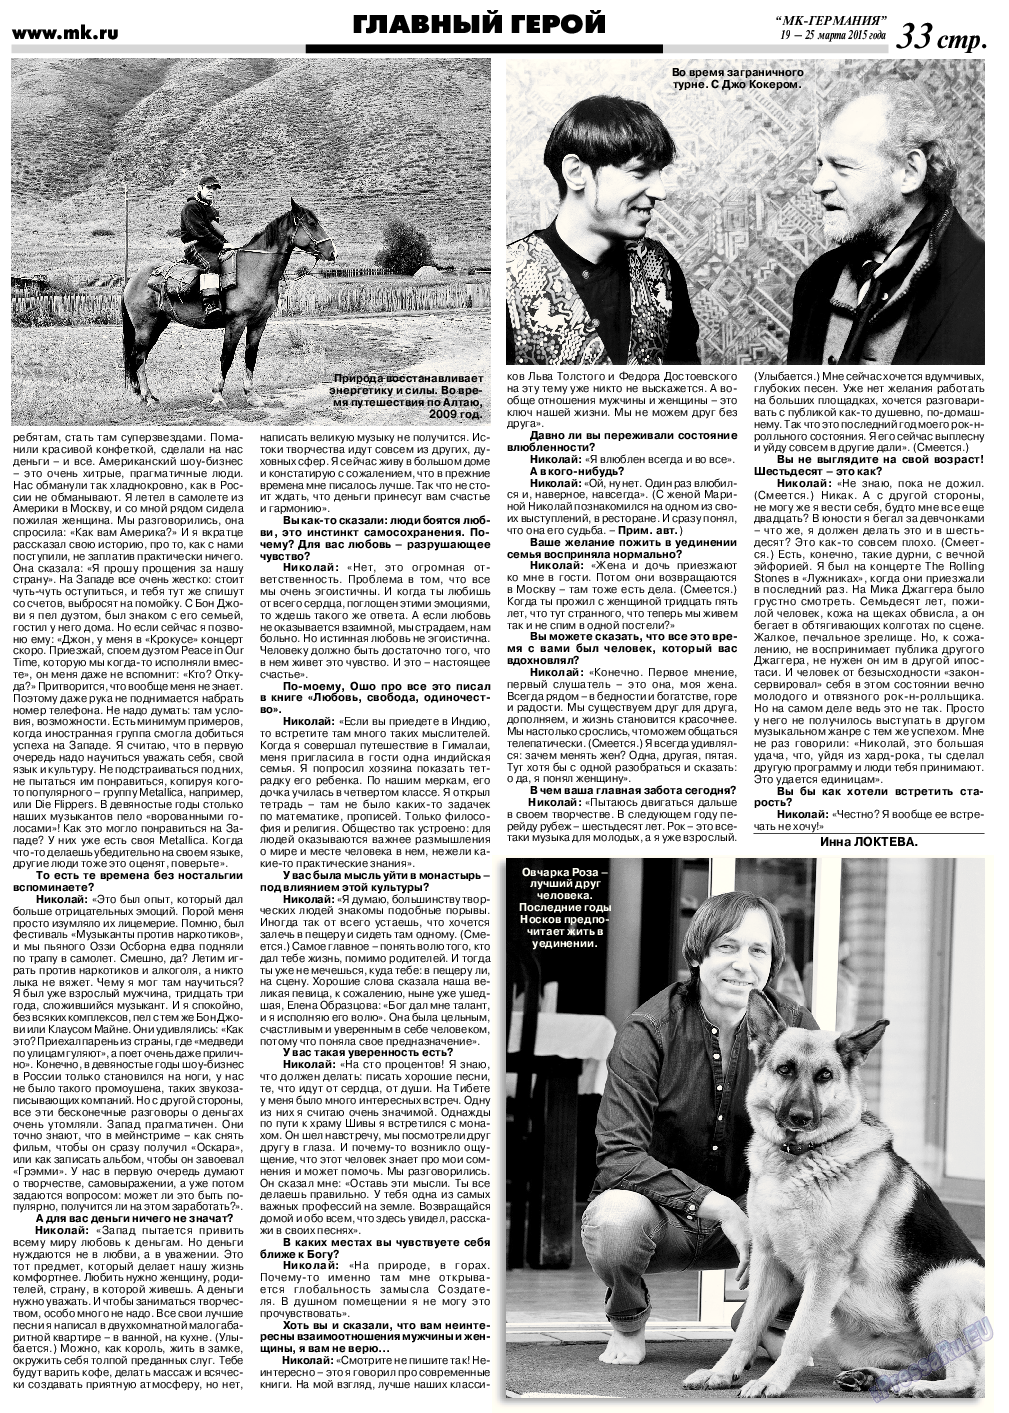 МК-Германия, газета. 2015 №12 стр.33